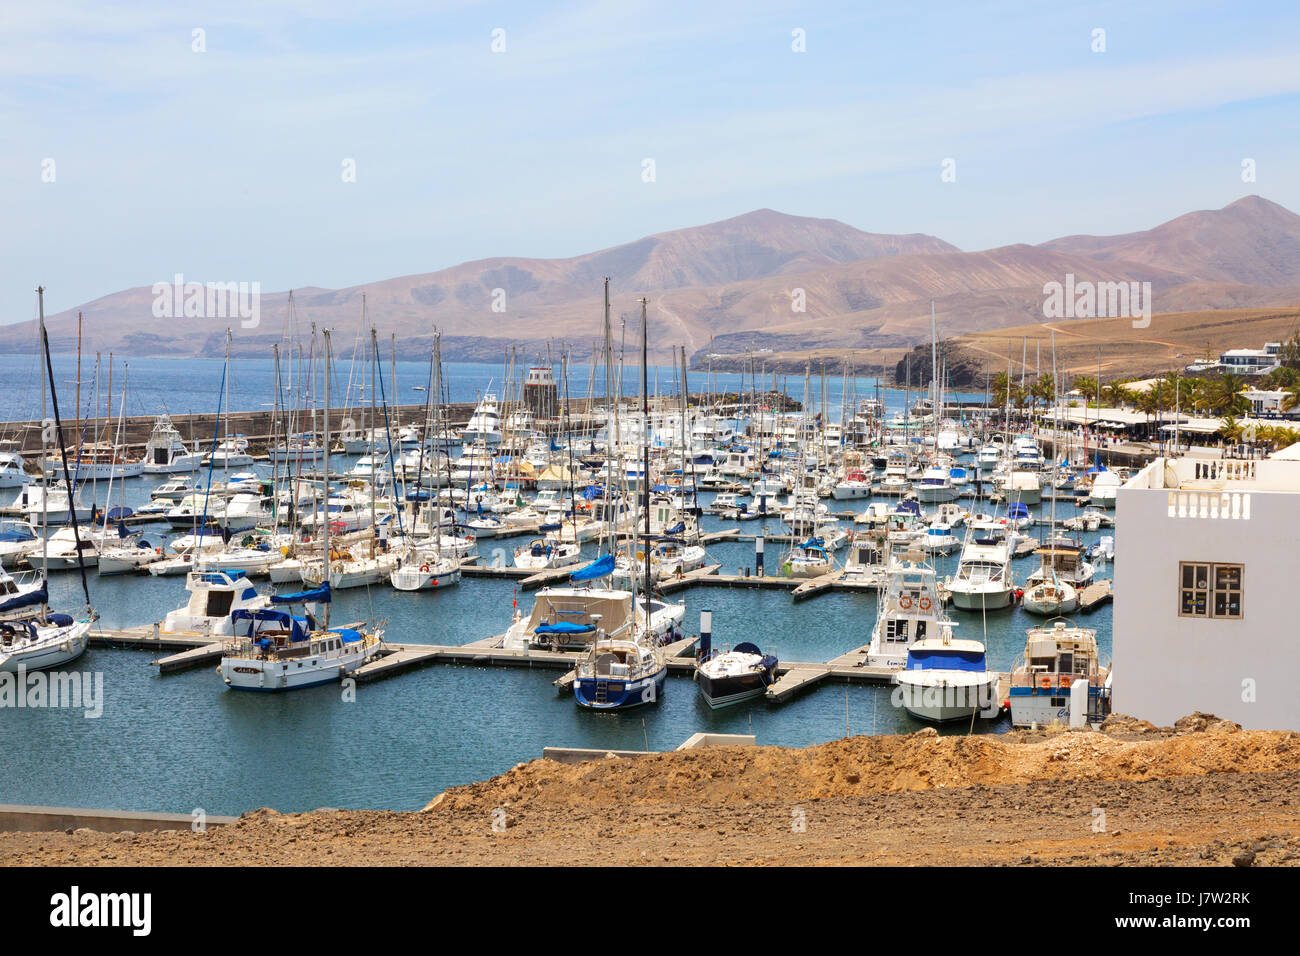 Puerto Calero, Lanzarote - boats moored in the harbour marina, east coast, Lanzarote, Canary Islands Europe Stock Photo